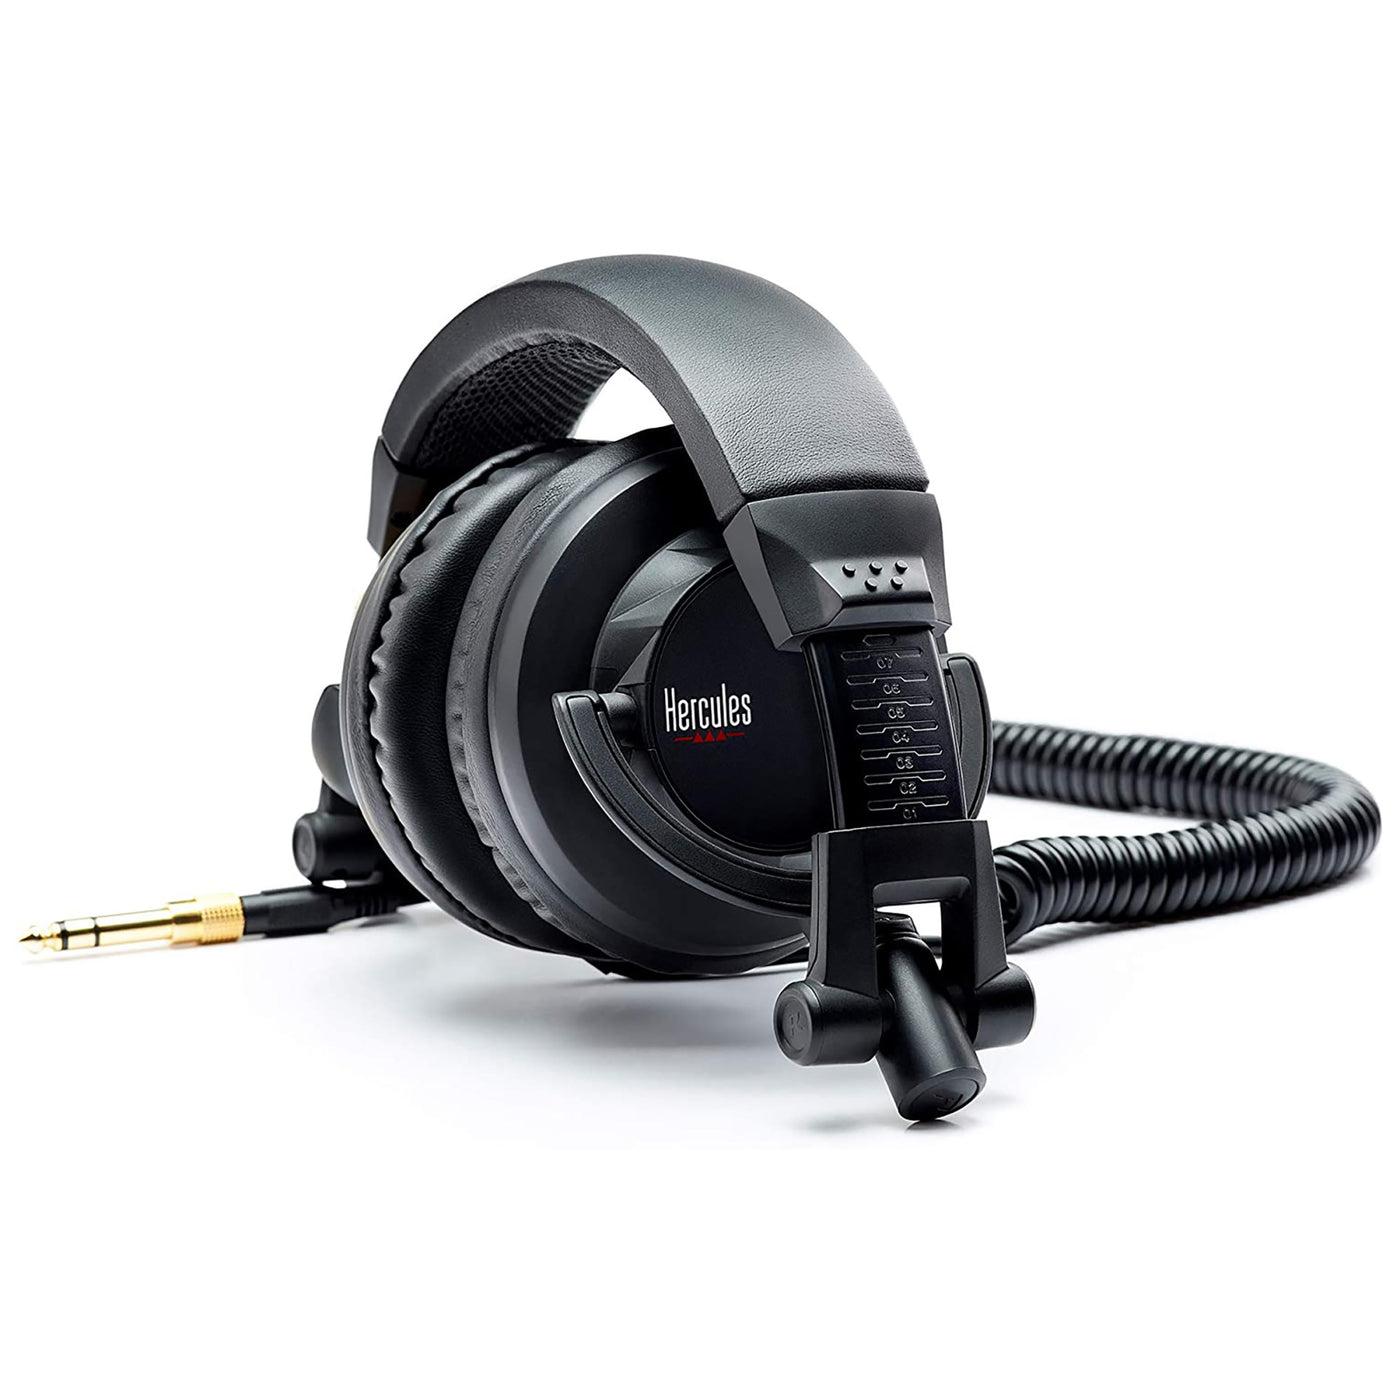 Hercules DJ HDP DJ45 Headphones